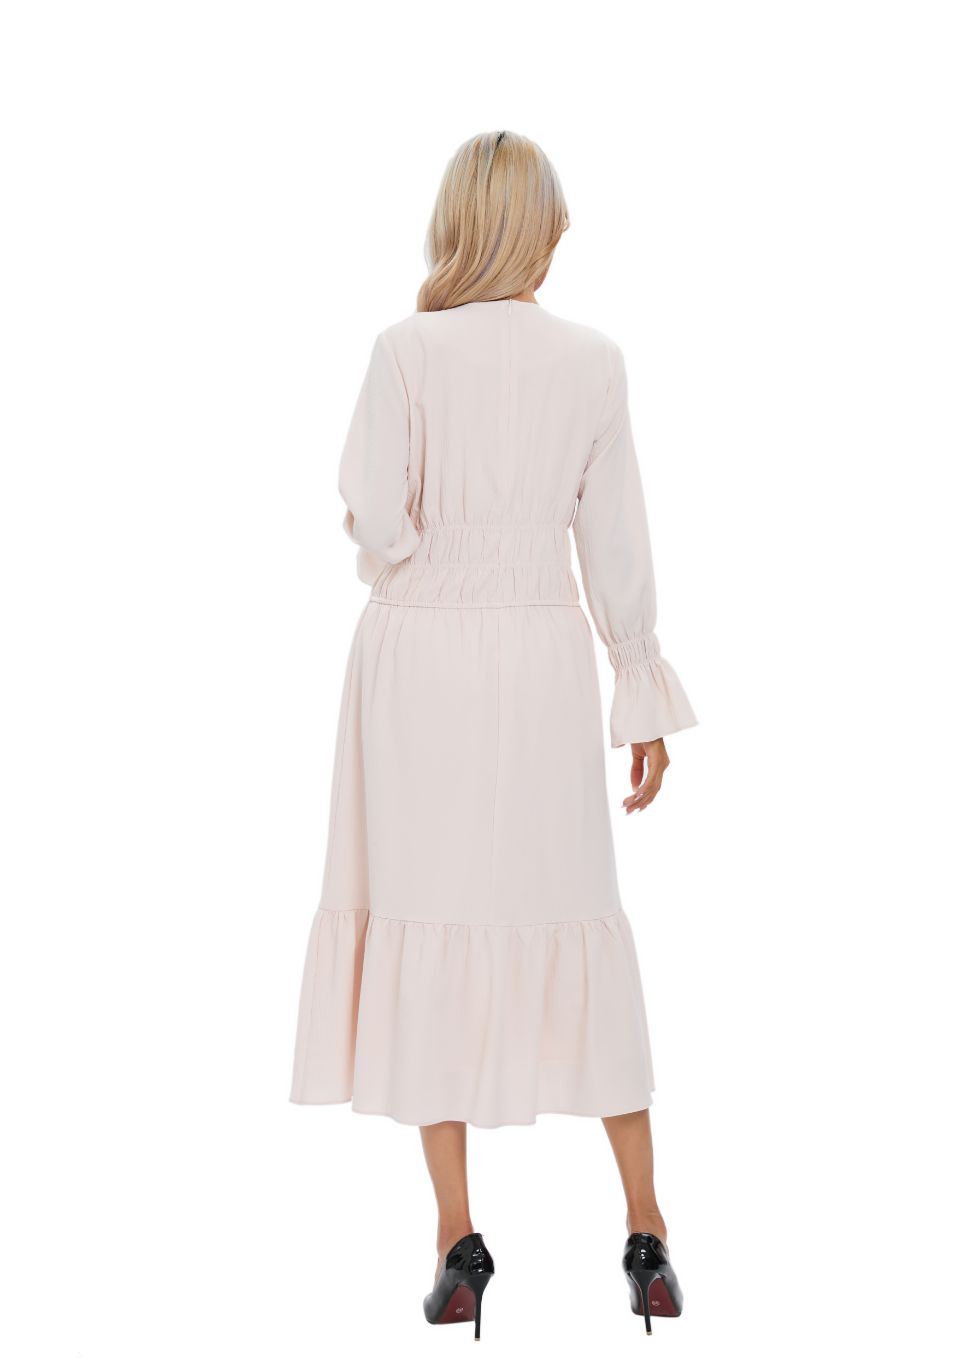 Charming Blush Layered Midi Dress - MissFinchNYC